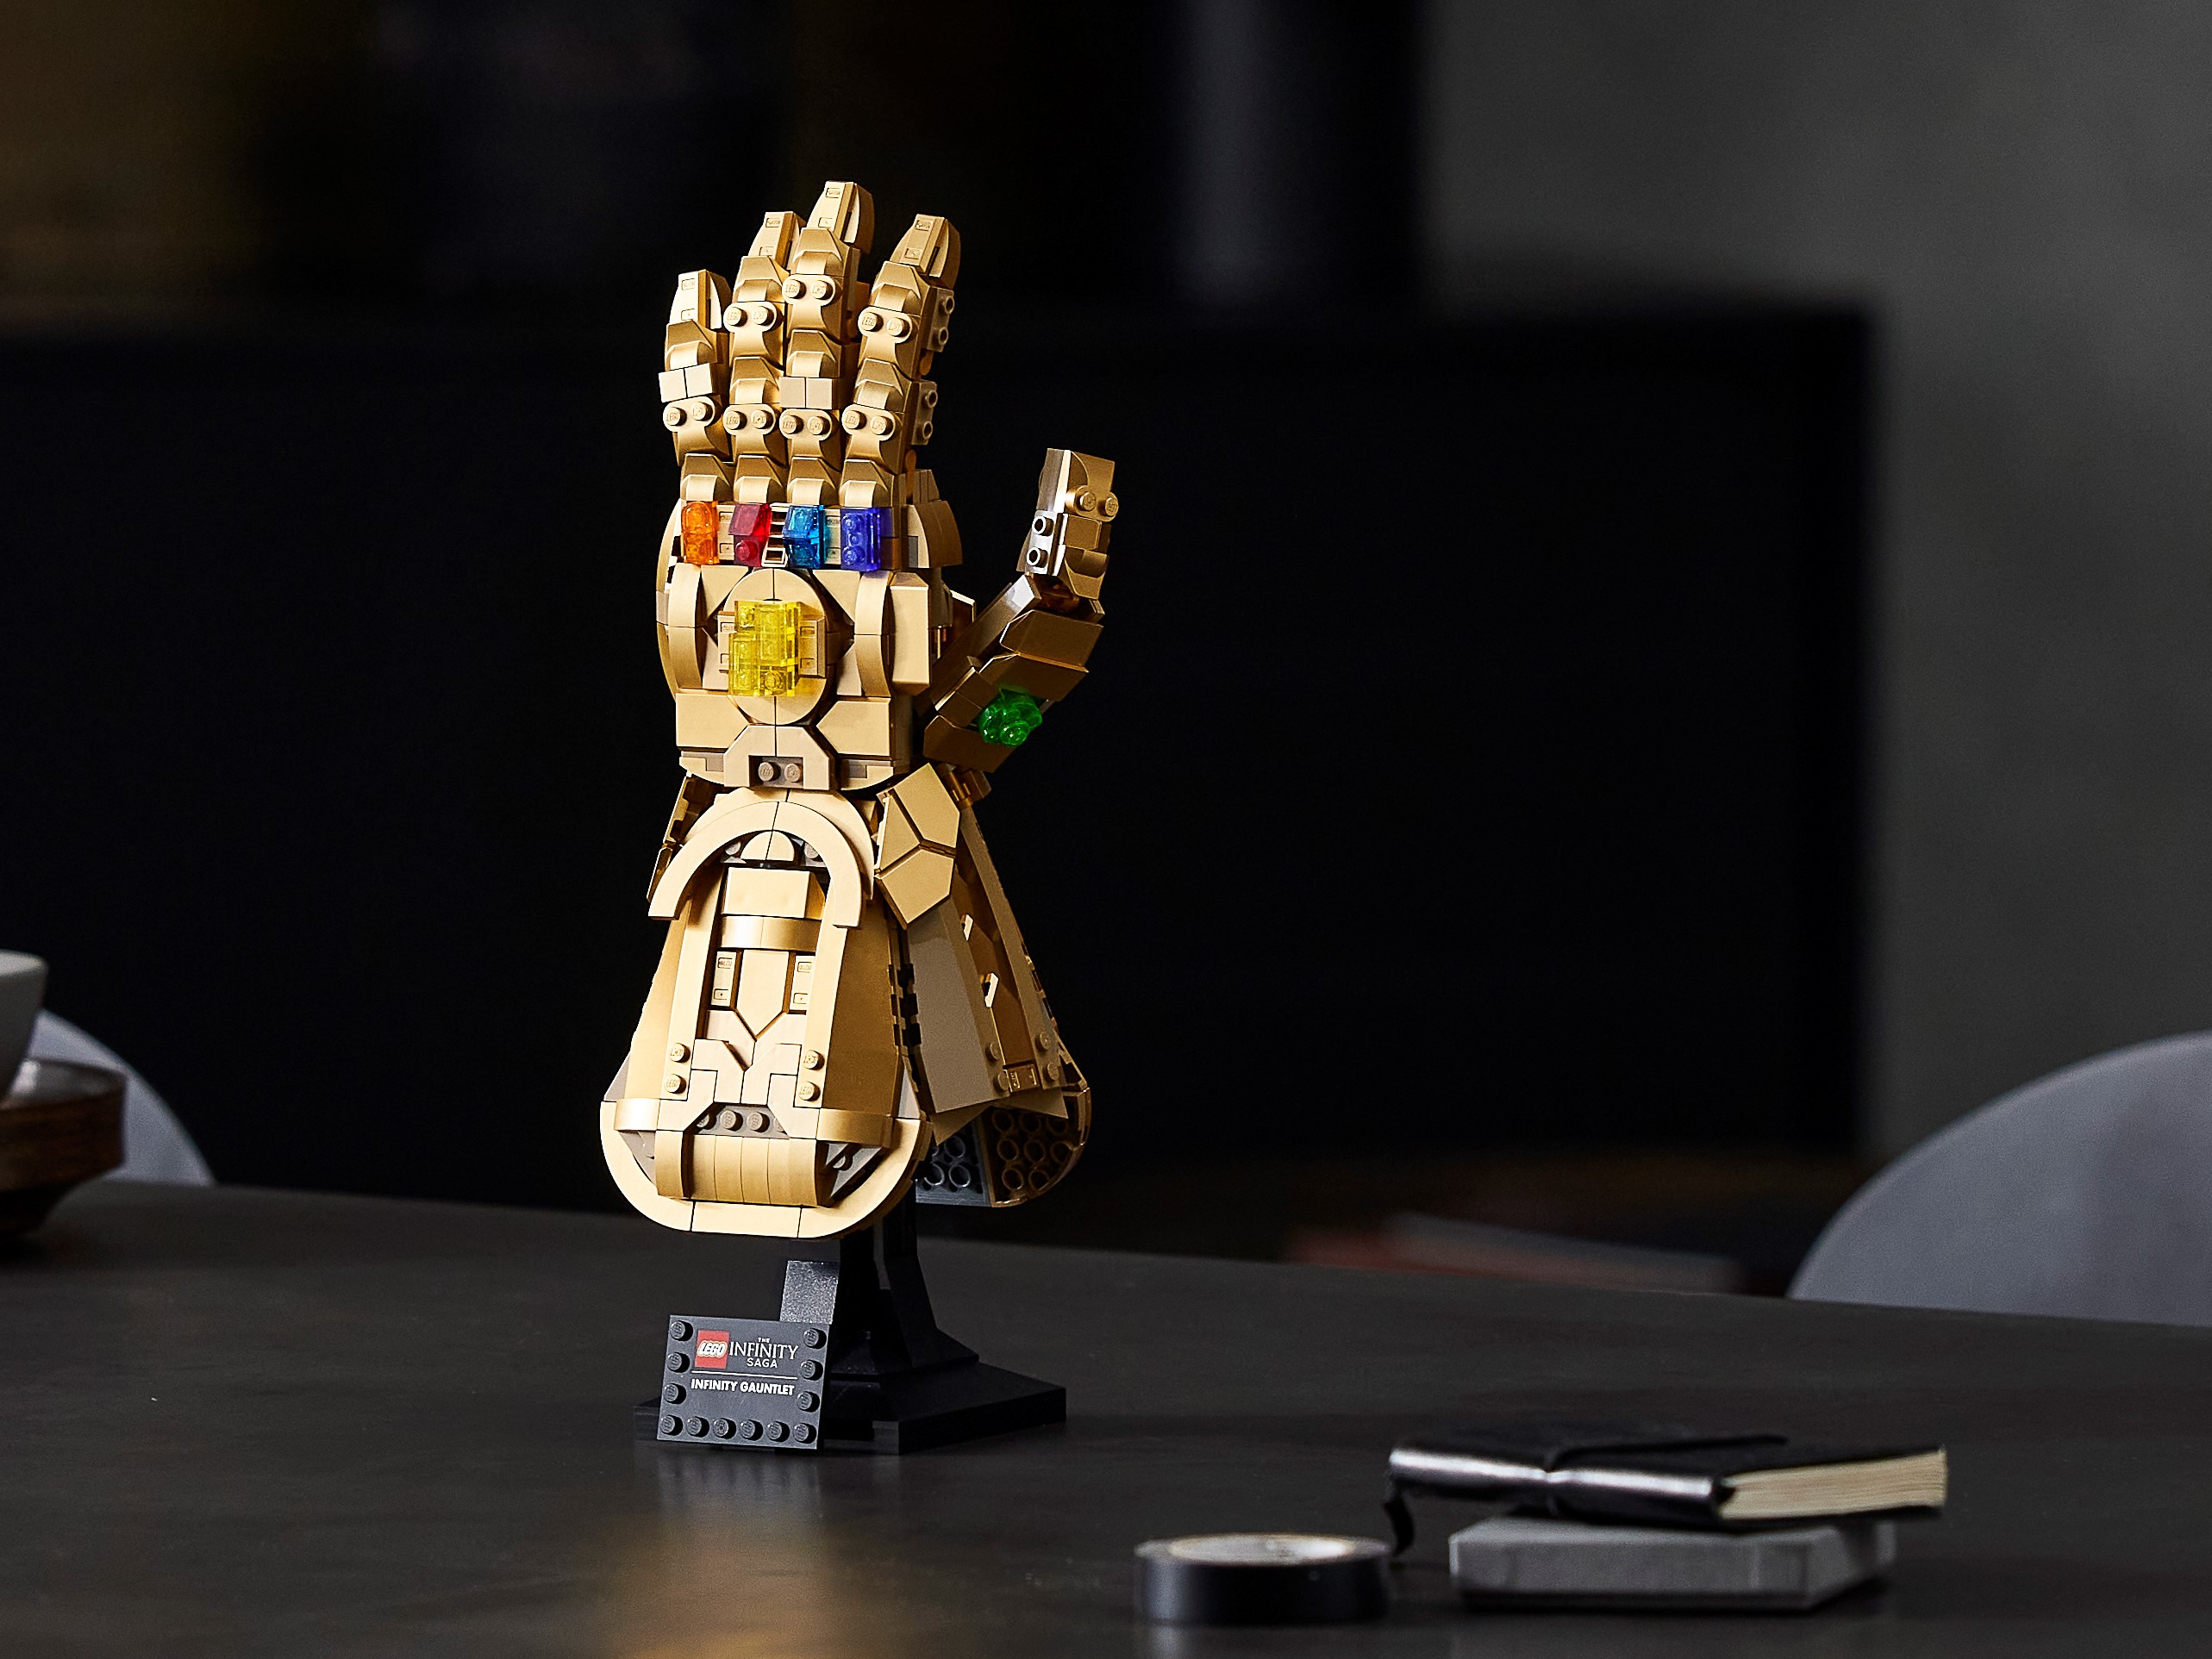 LEGO® Marvel Super Heroes Avengers Movie 4 76191 Infinity Handschuh